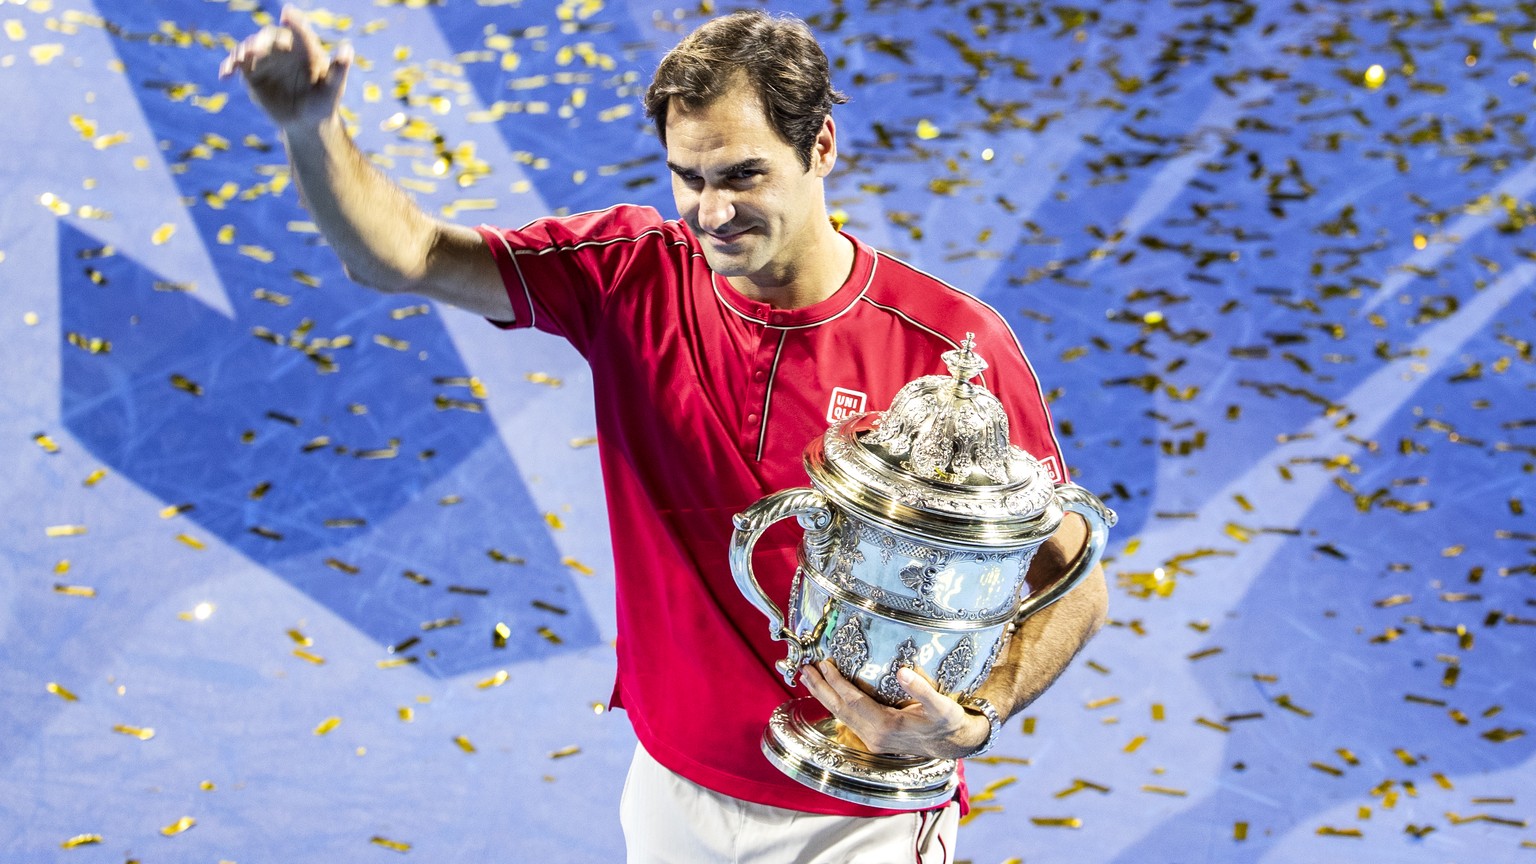 2019 gewann Roger Federer zum letzten Mal in Basel.